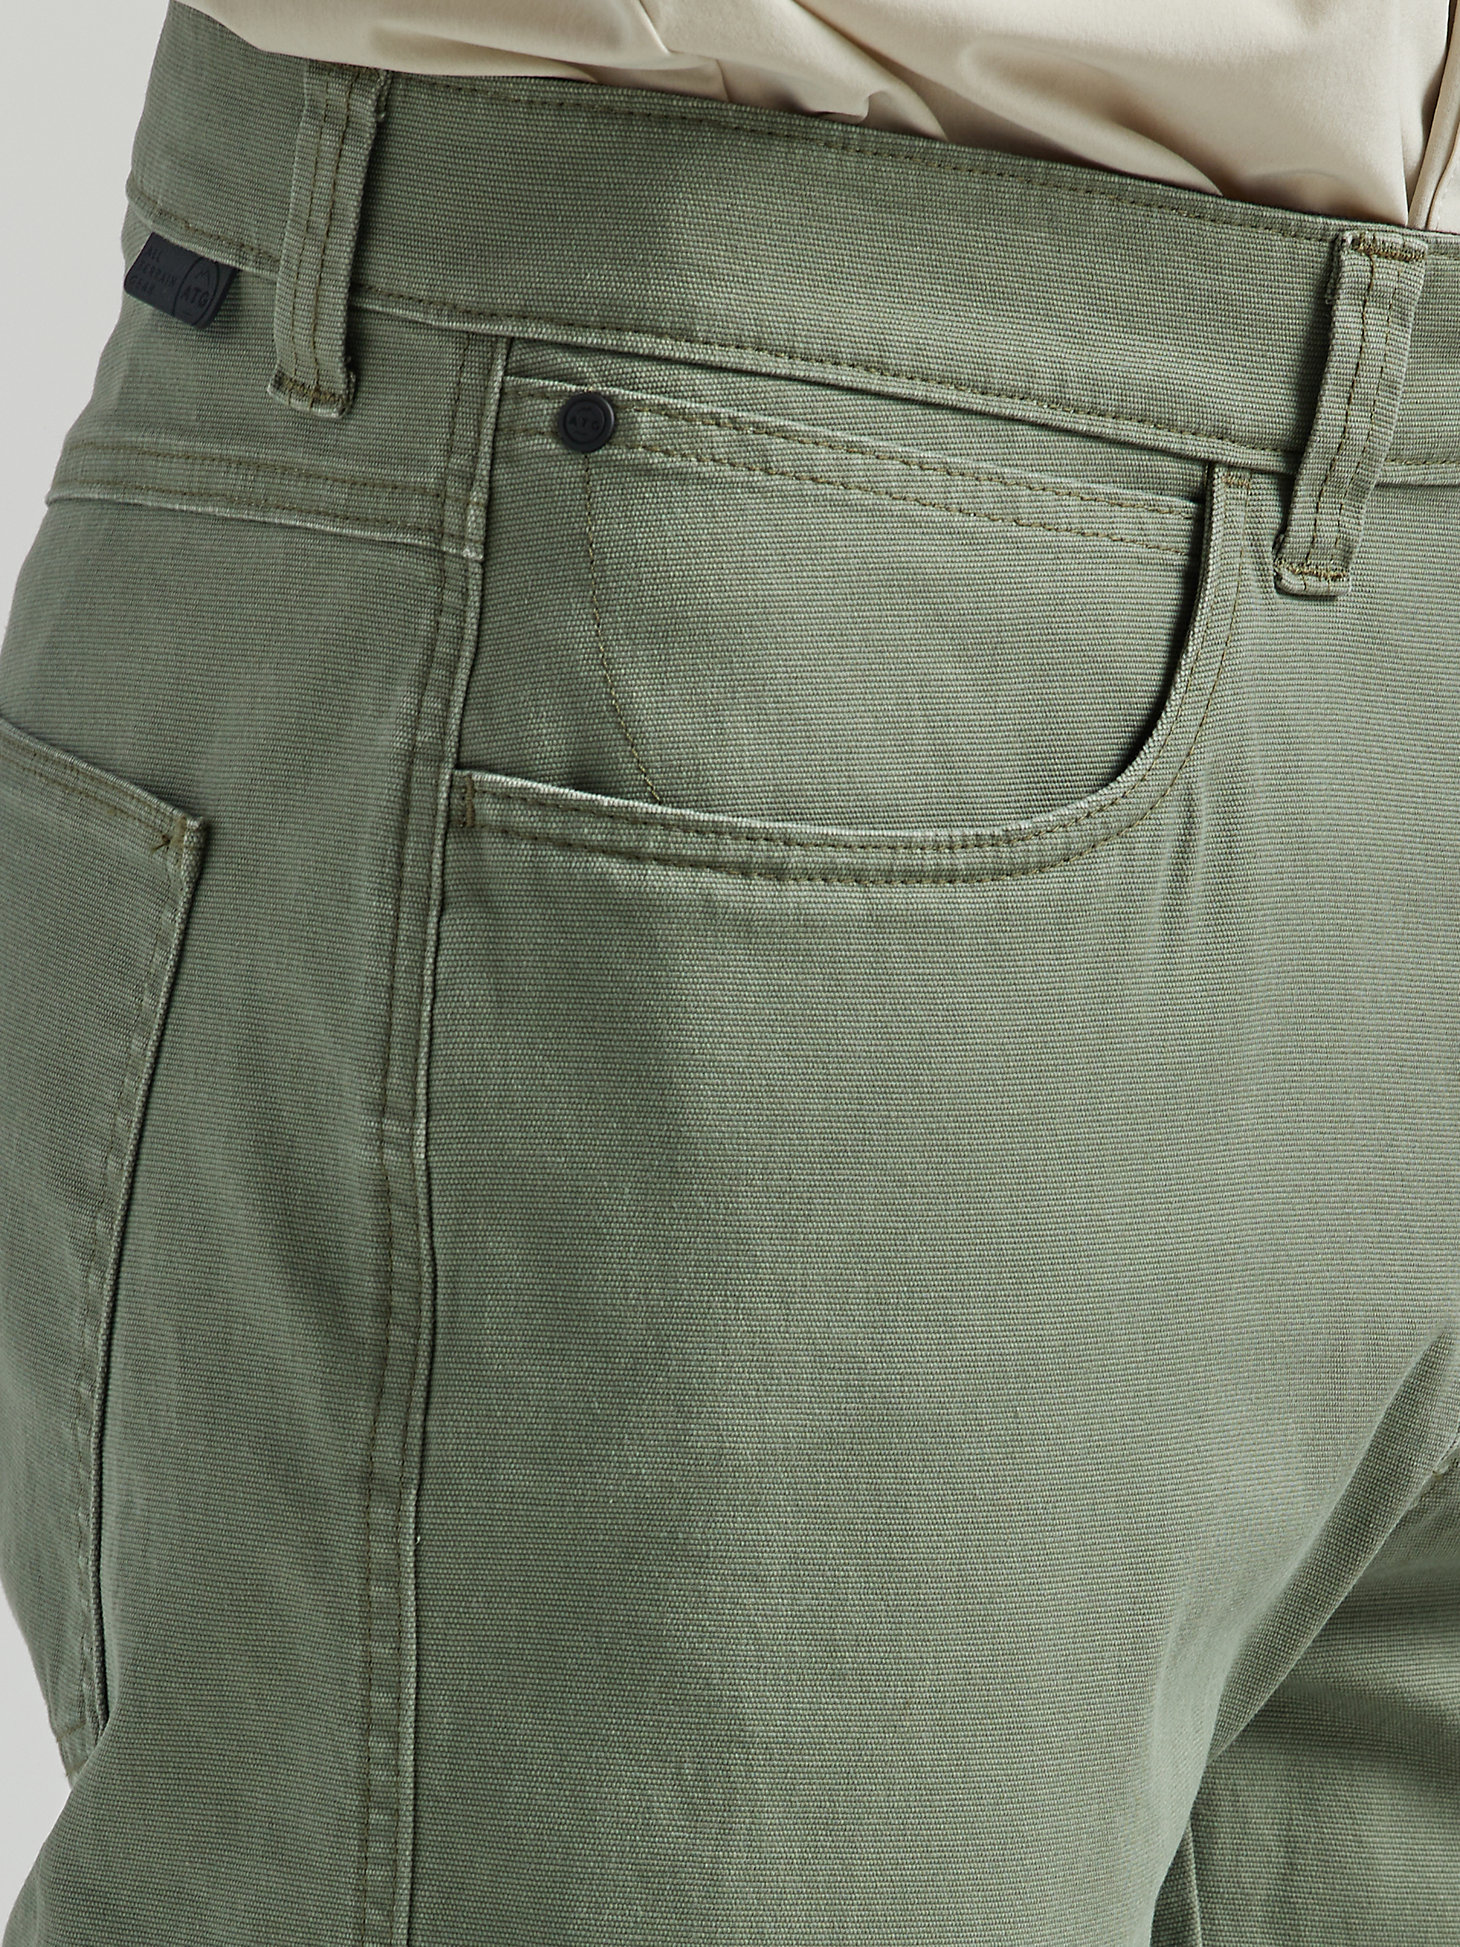 ATG By Wrangler™ Men's Five Pocket Pant in Dusty Olive alternative view 8